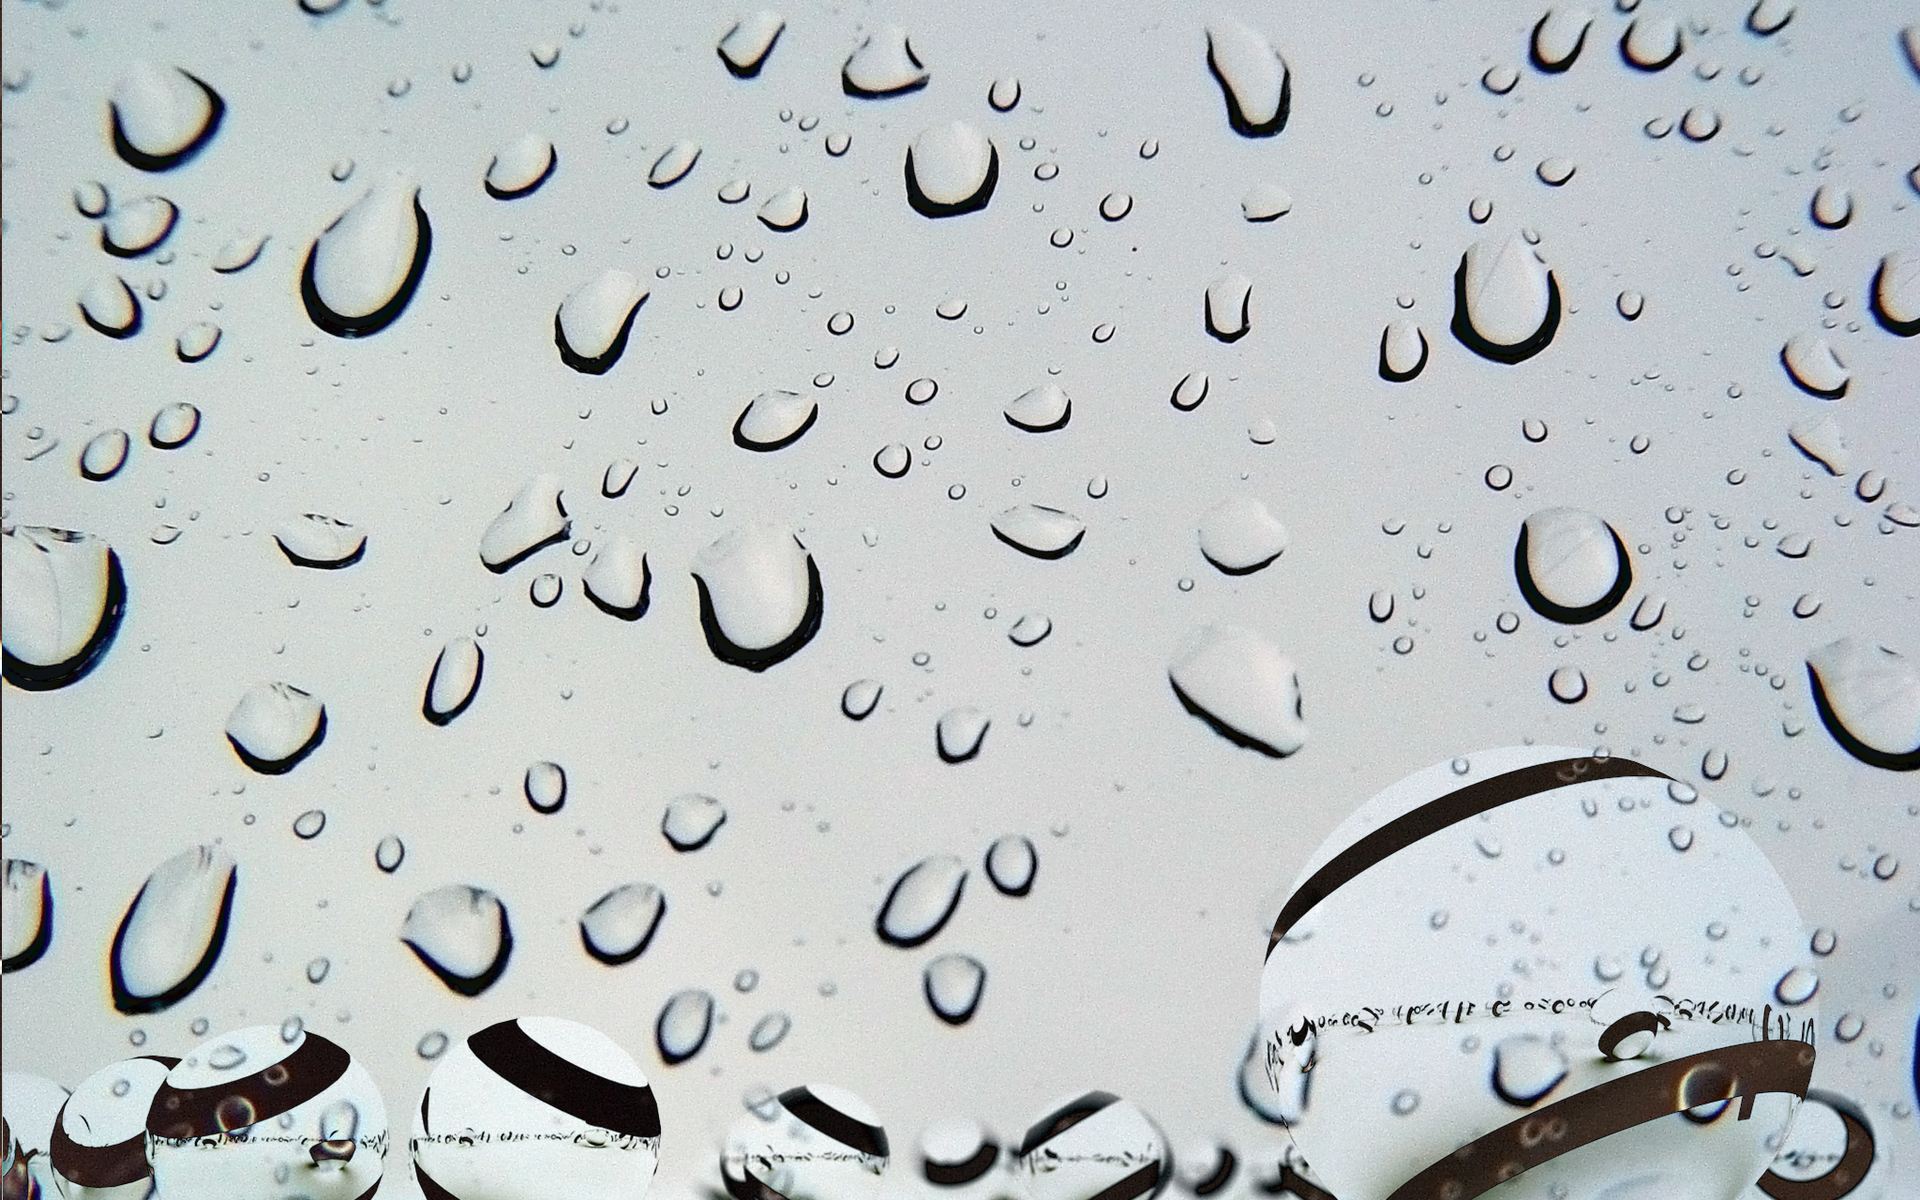 wet screen wallpaper,drop,water,rain,dew,precipitation